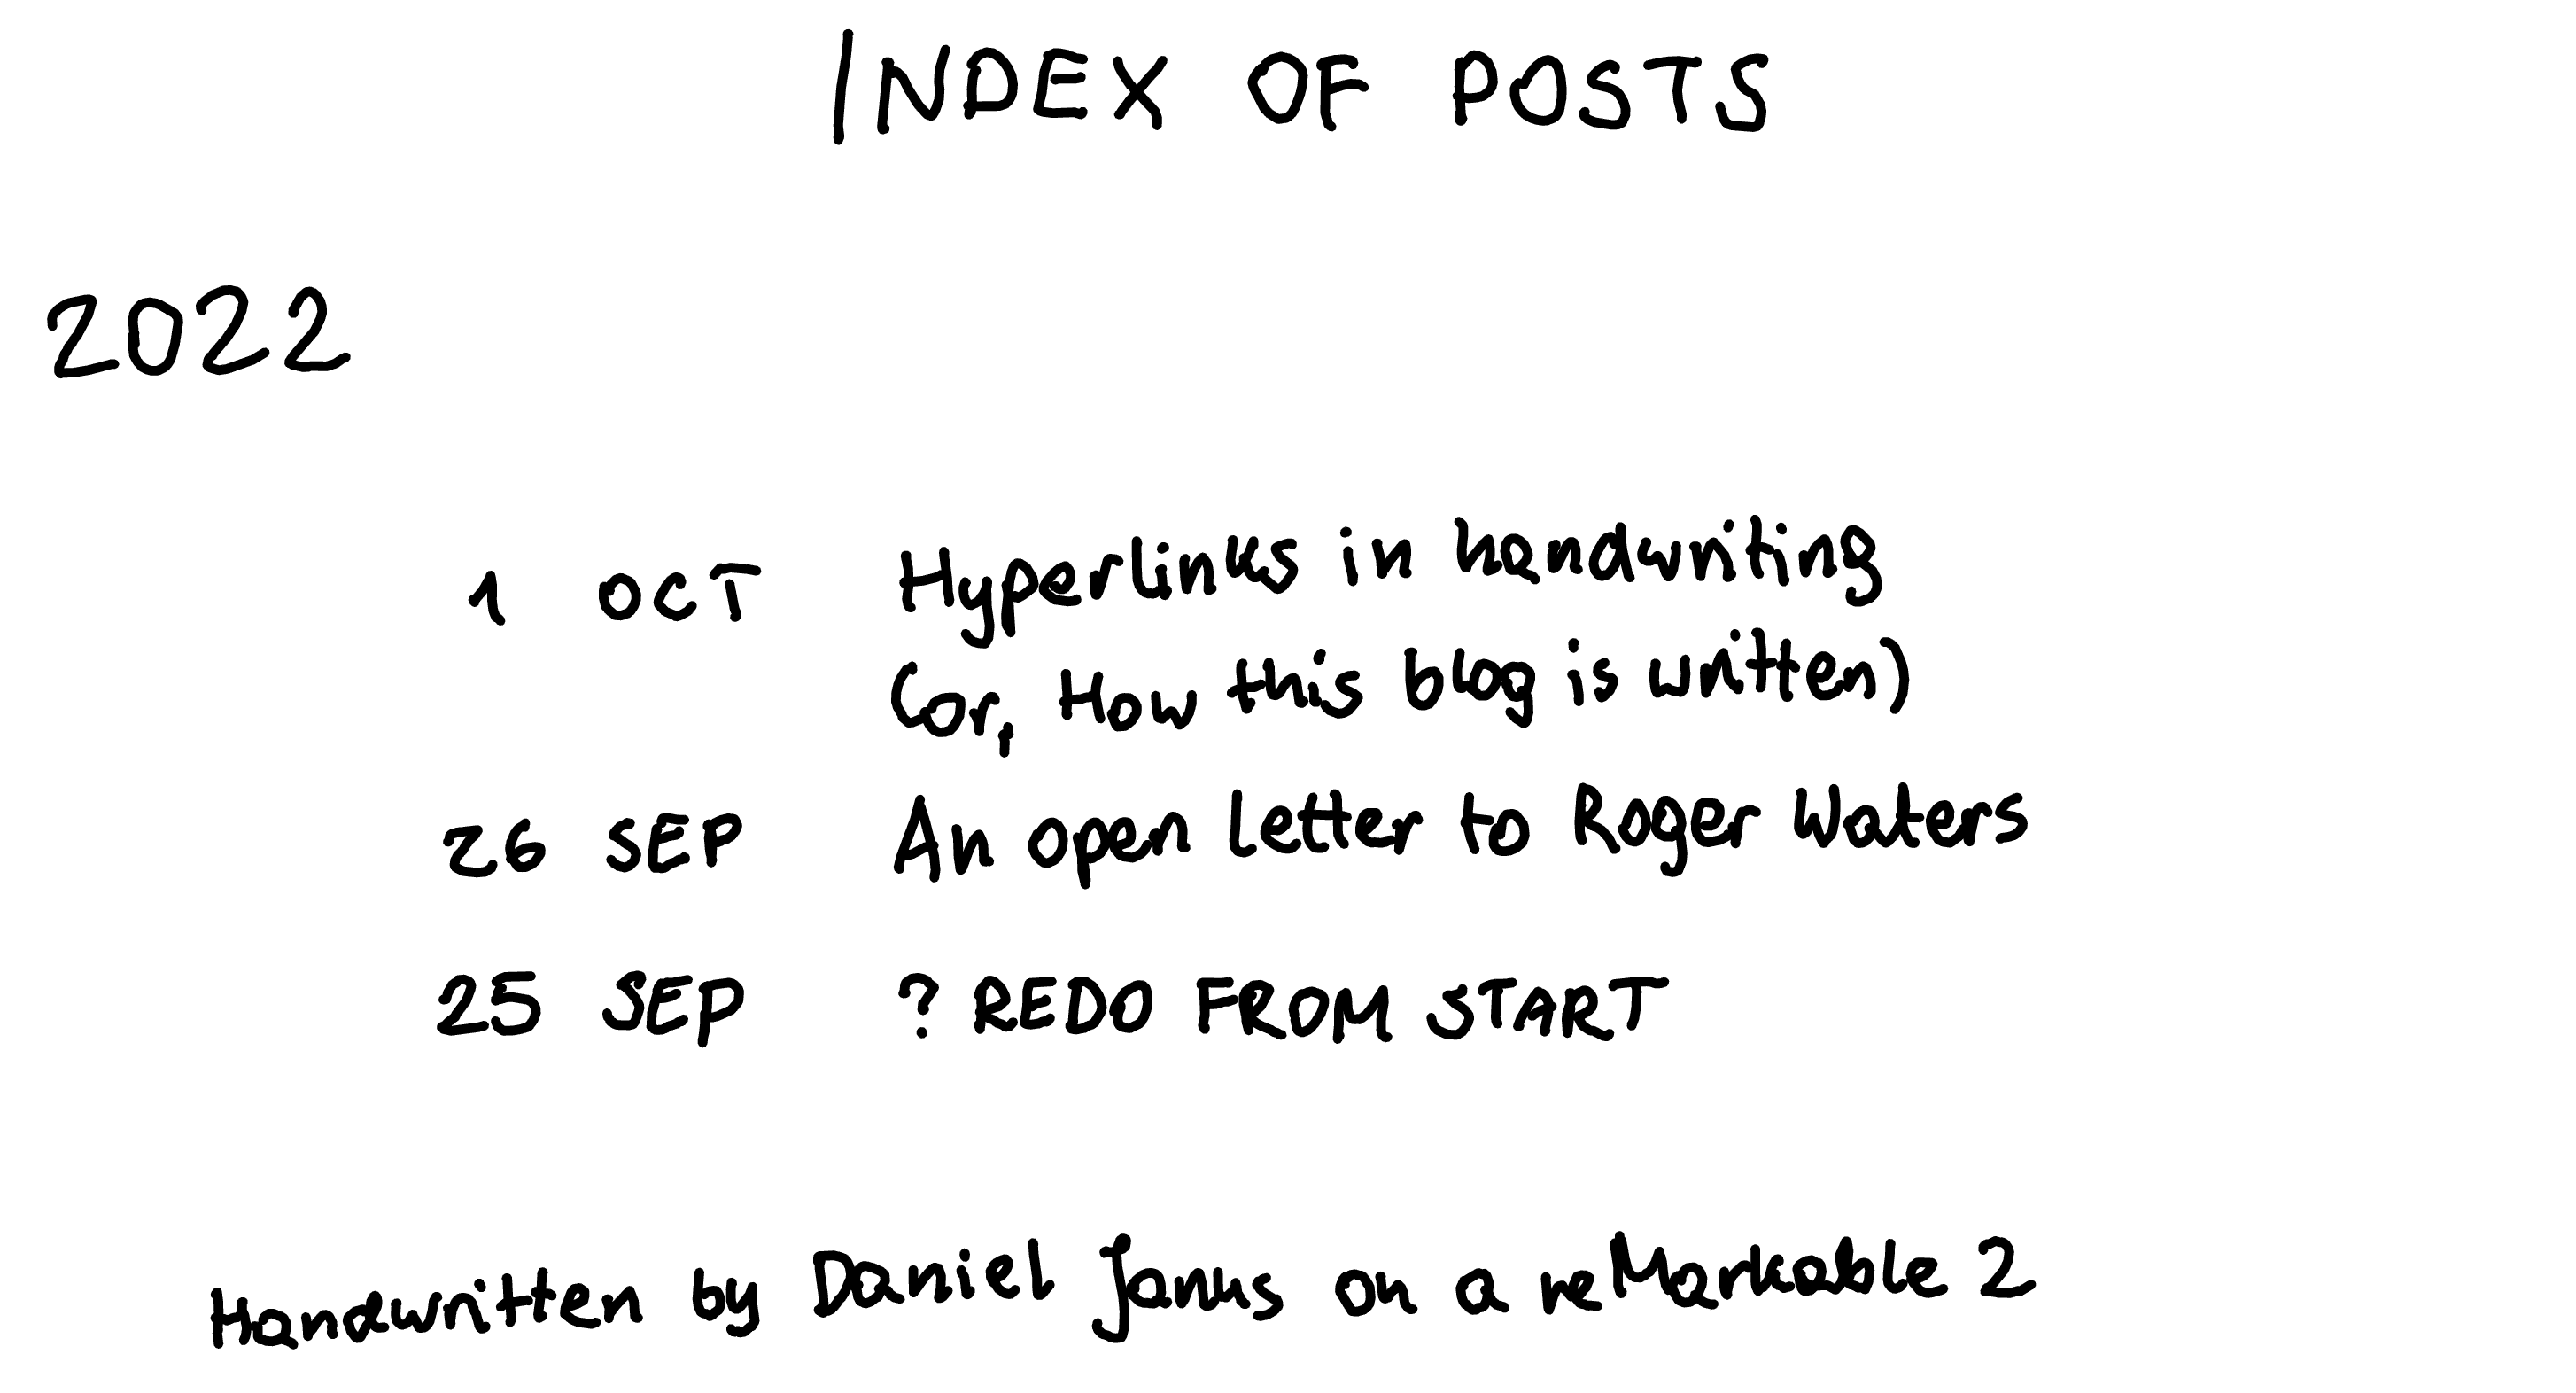 Index of posts